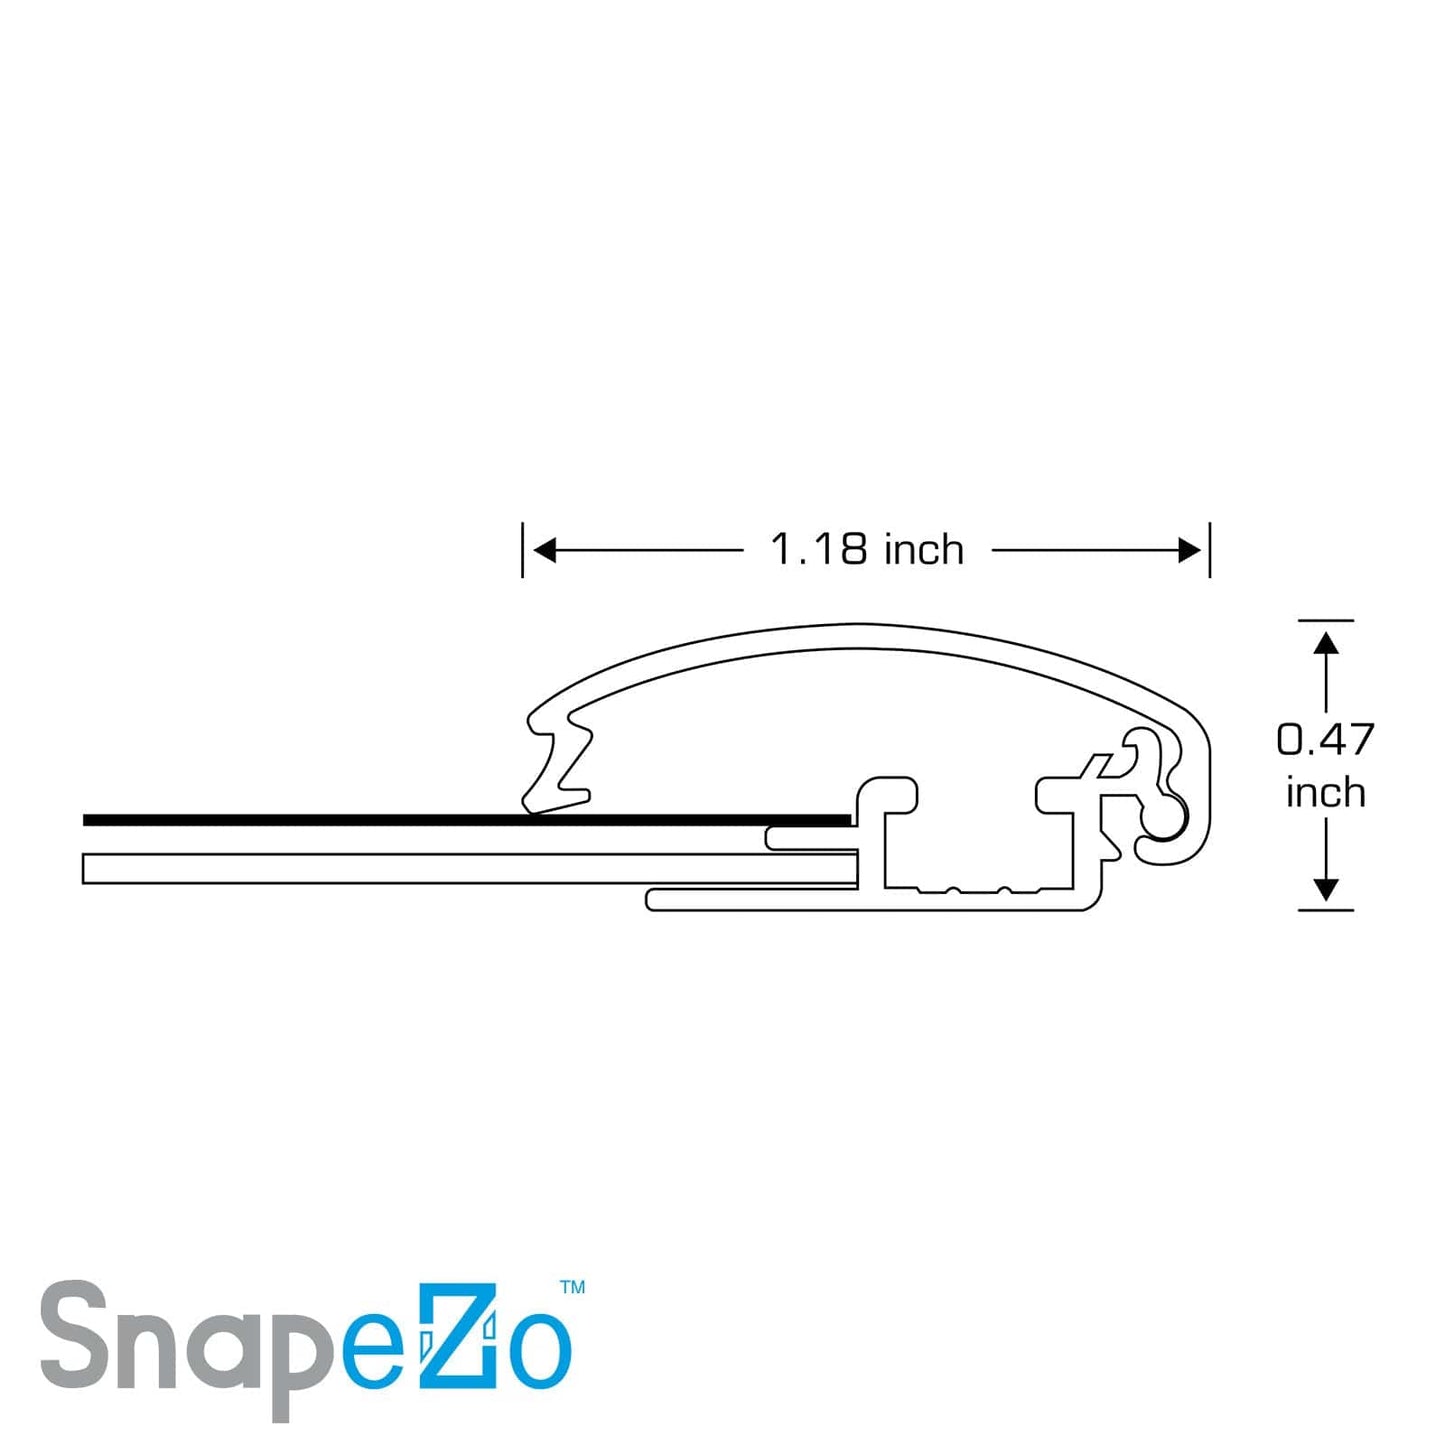 21x34 White SnapeZo® Snap Frame - 1.2" Profile - Snap Frames Direct